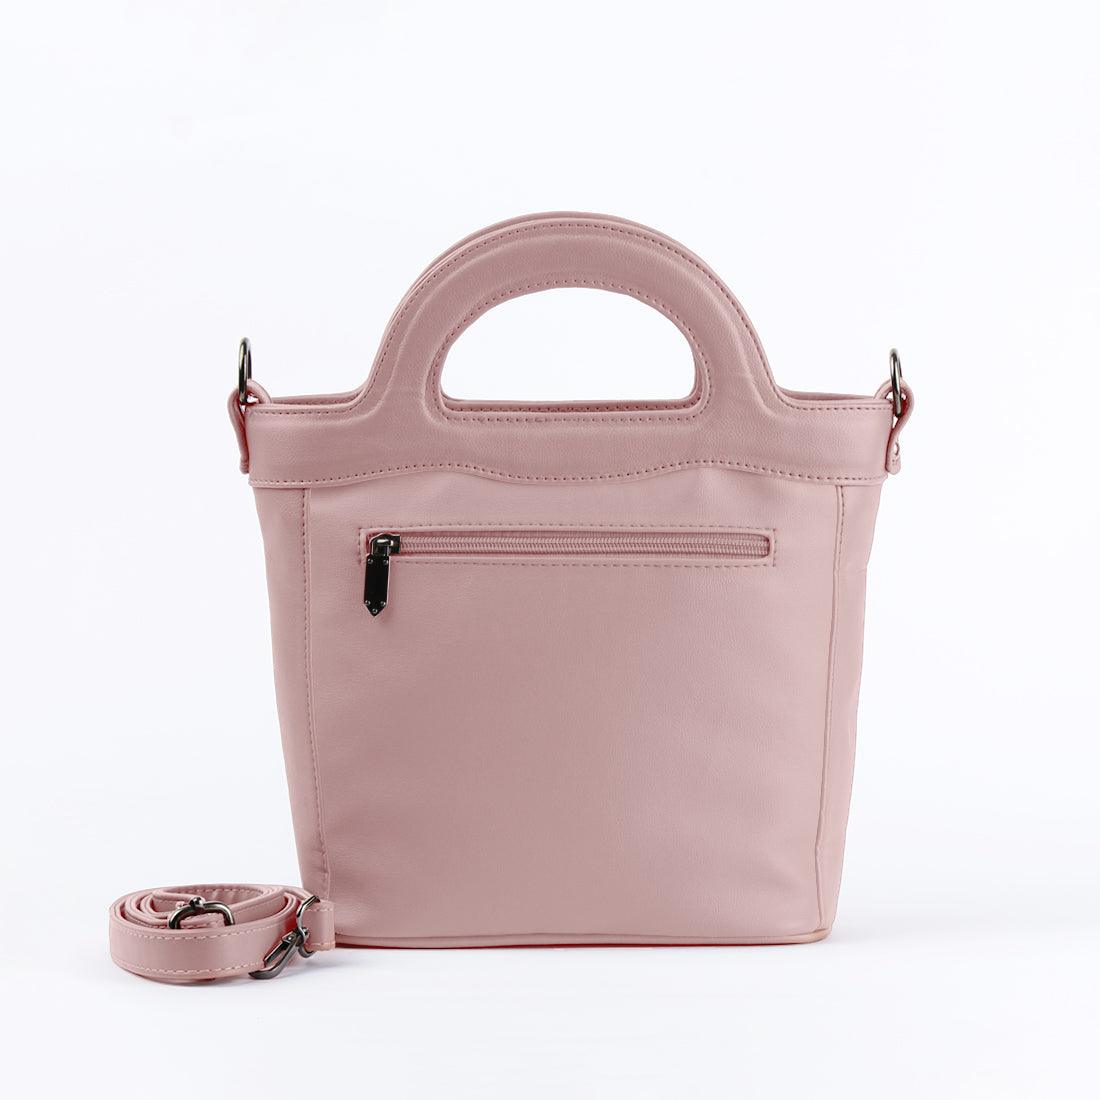 Rose Top Handle Handbag Bonjour - CANVAEGYPT